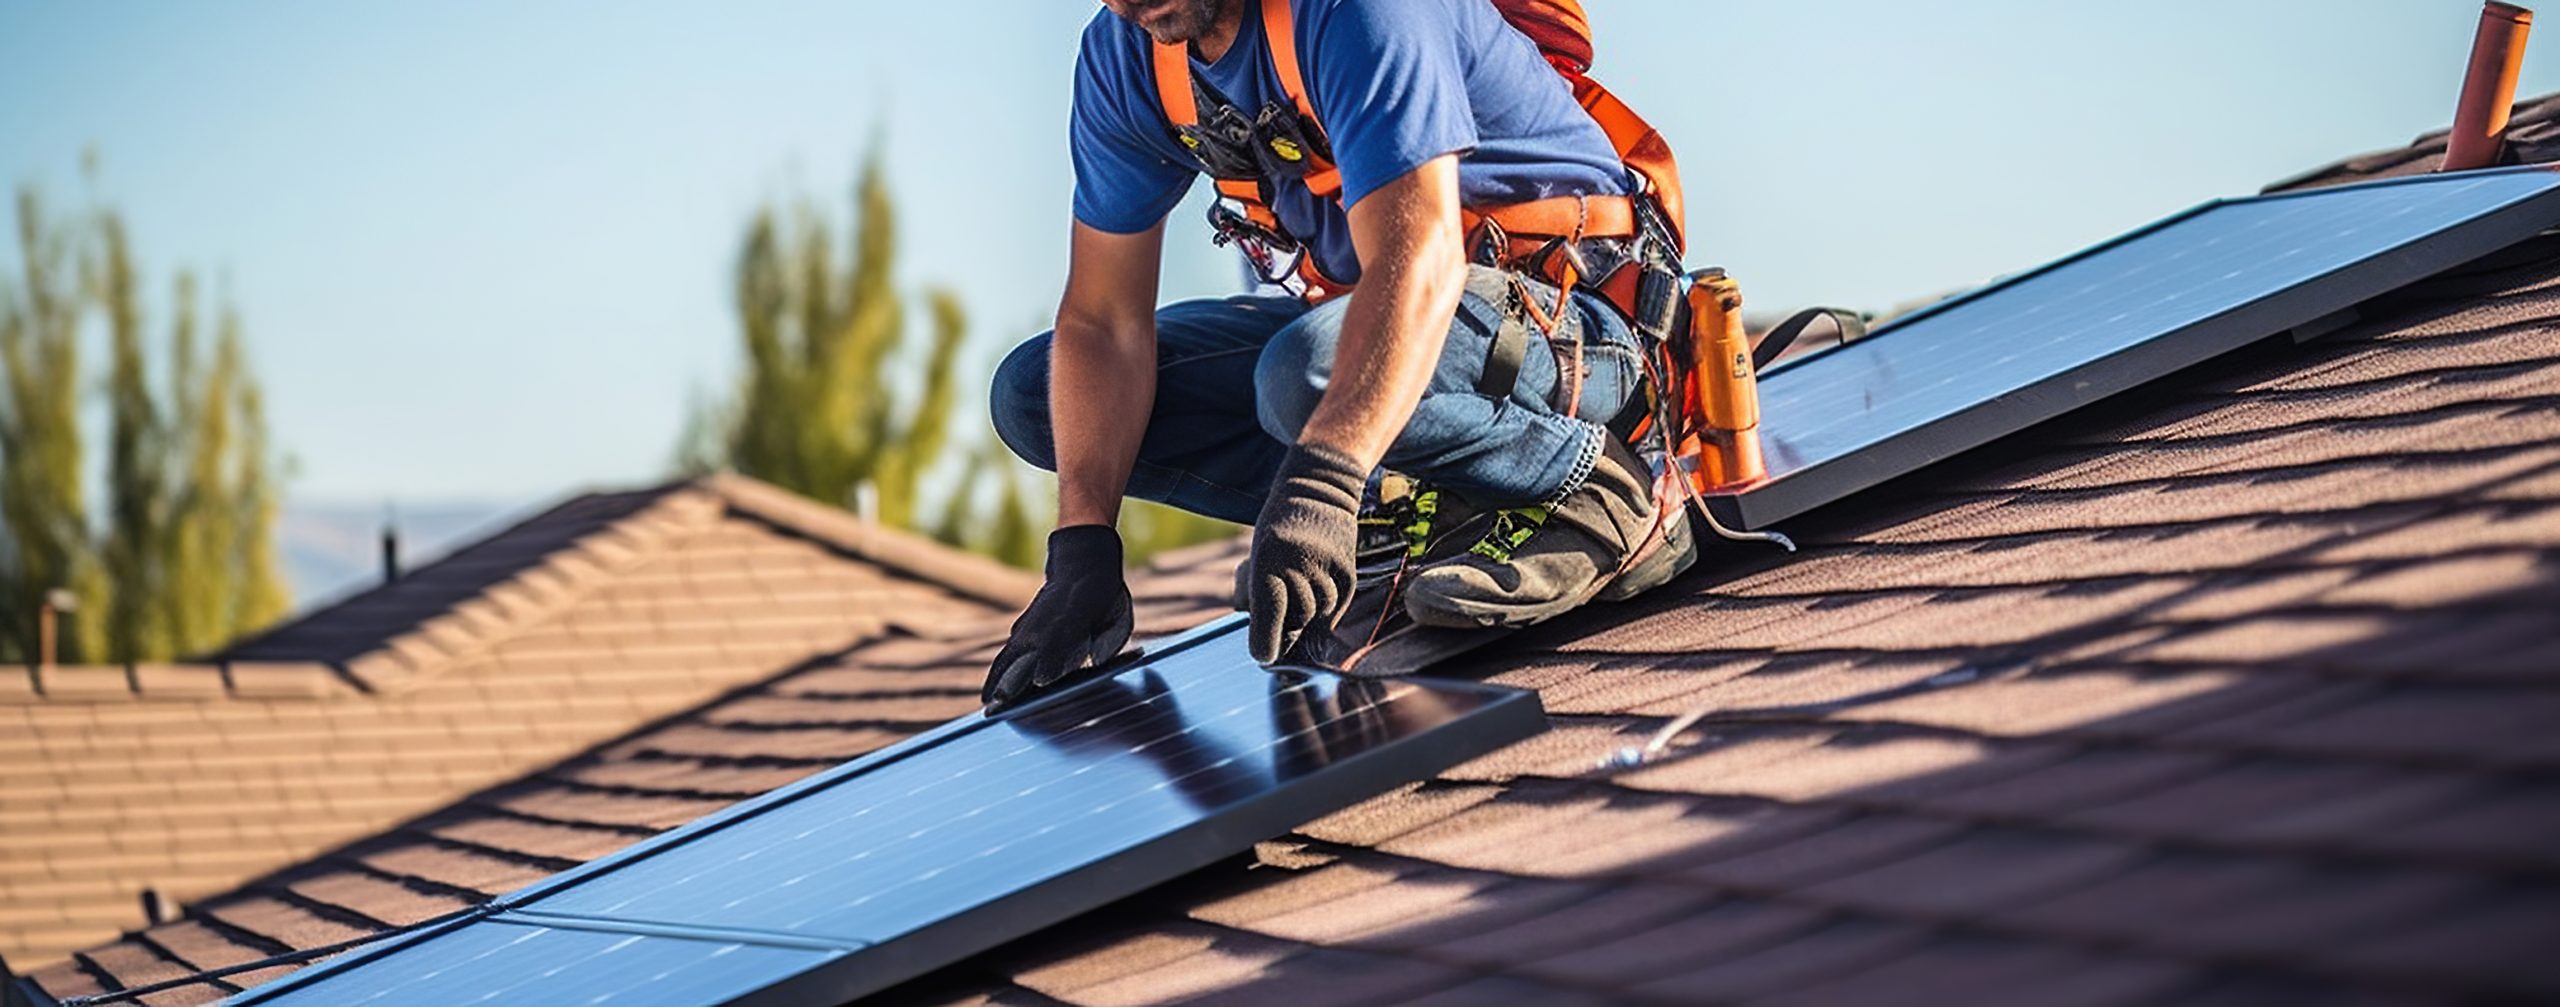 Technician installing integrated solar panels on asphalt shingle roof